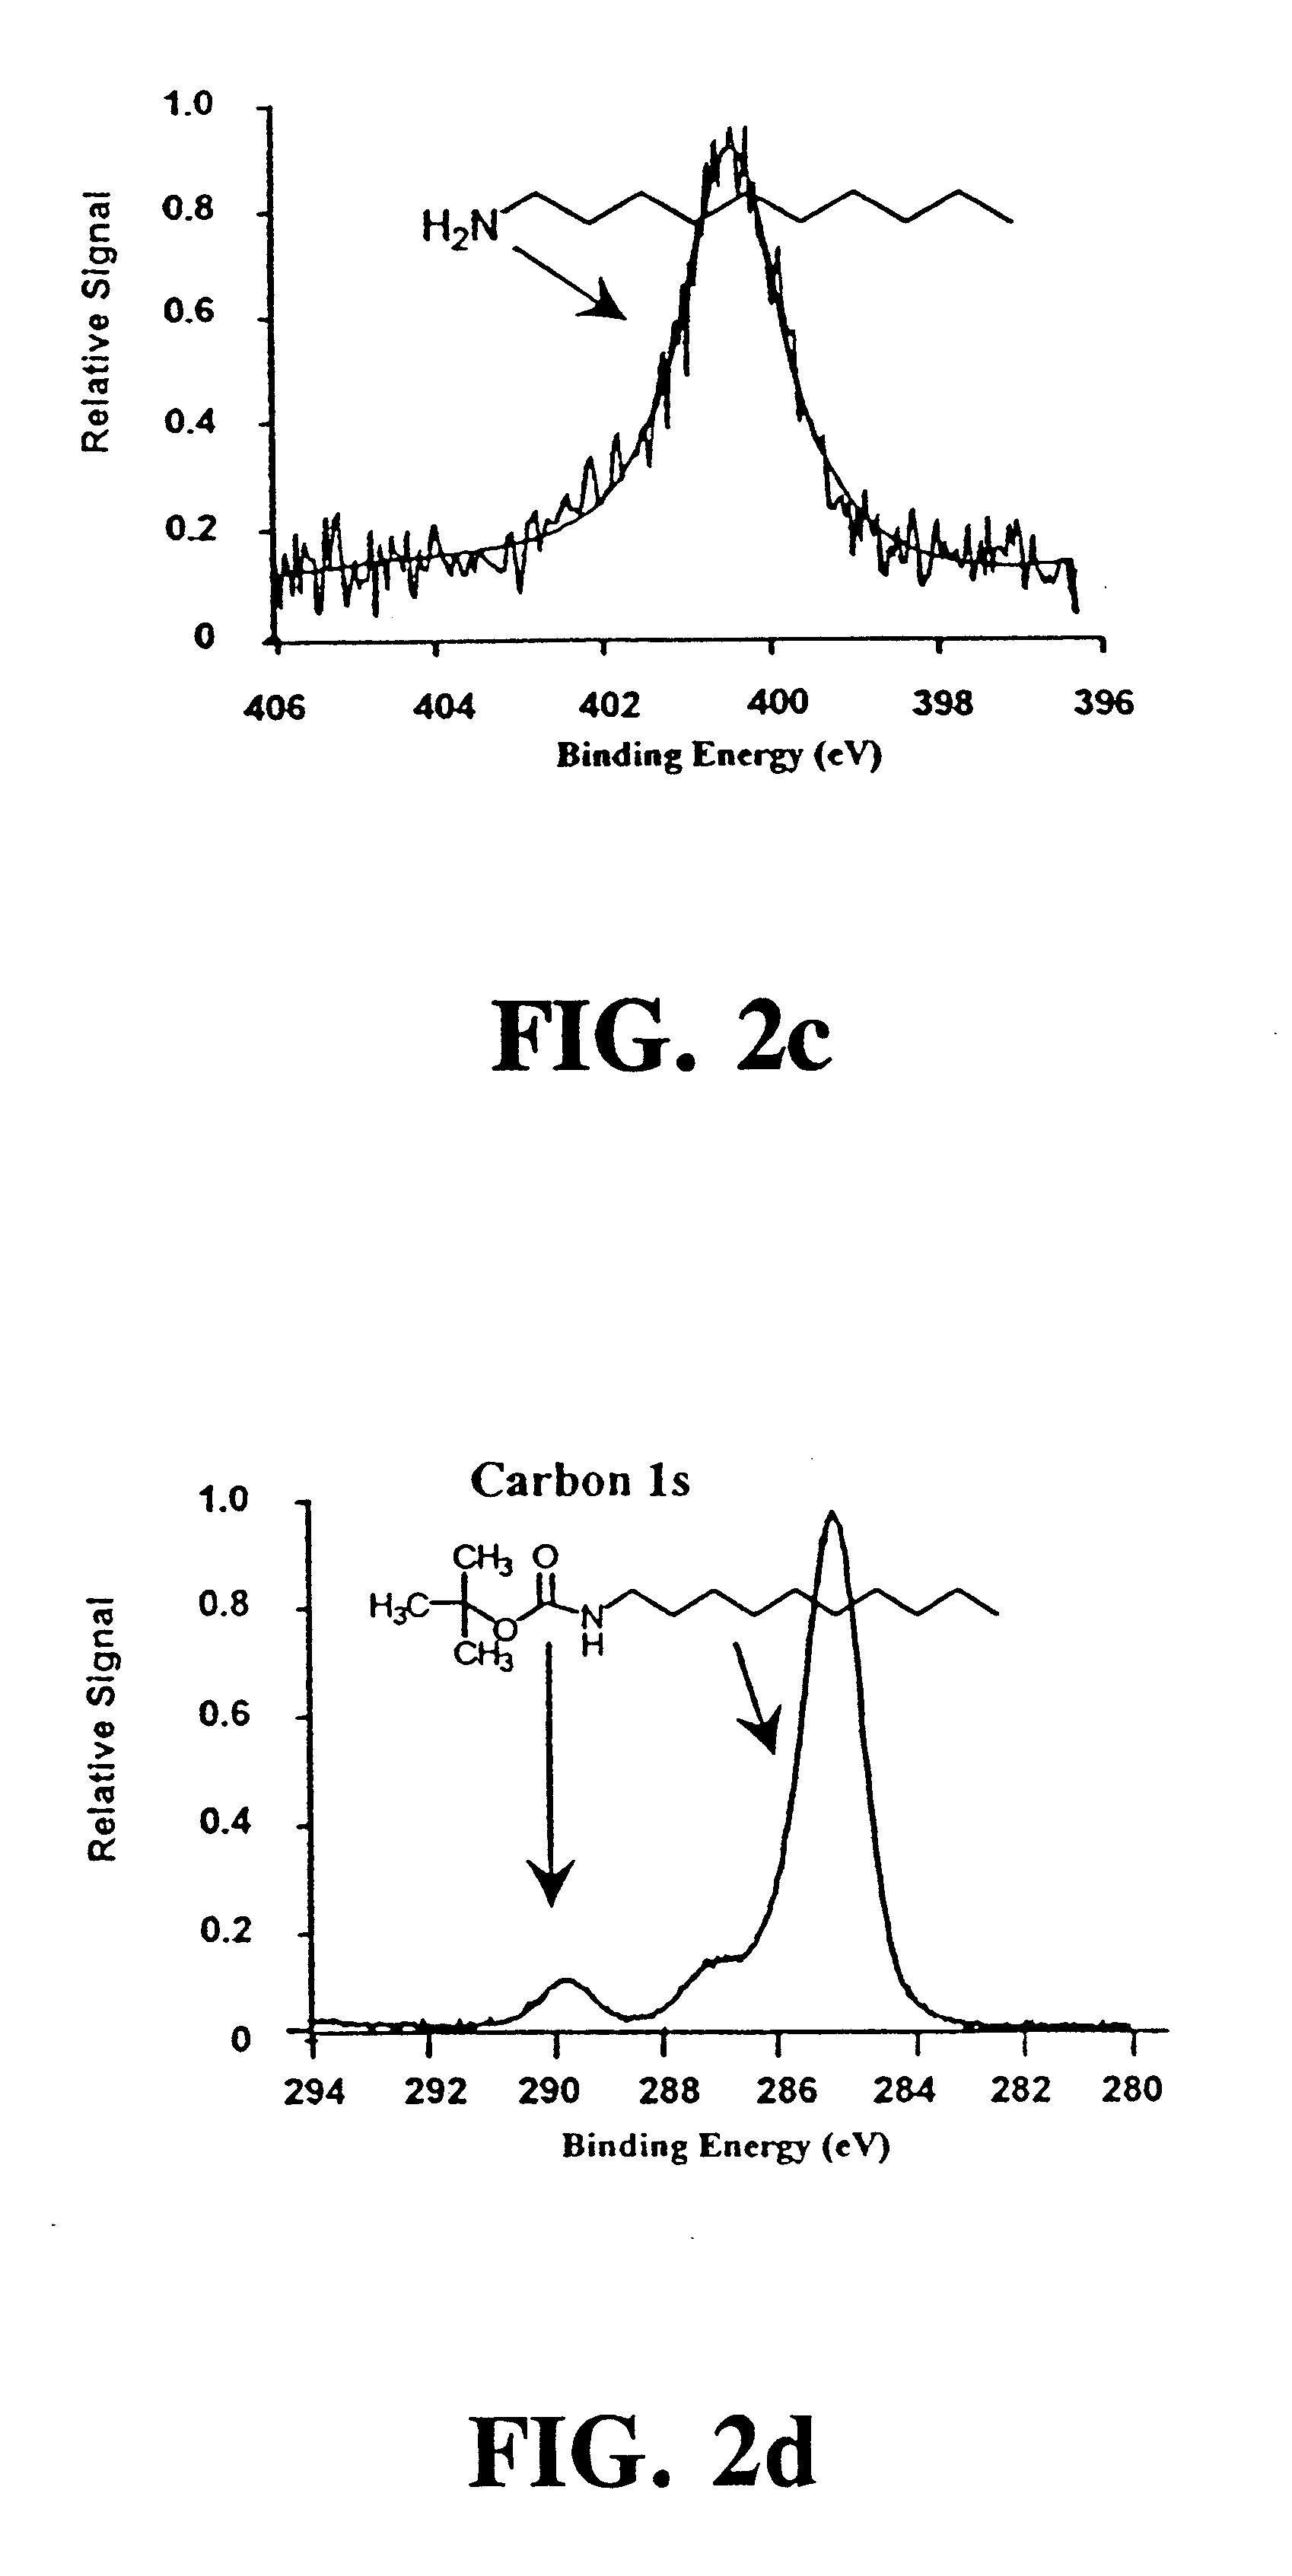 Modified carbon, silicon, & germanium surfaces